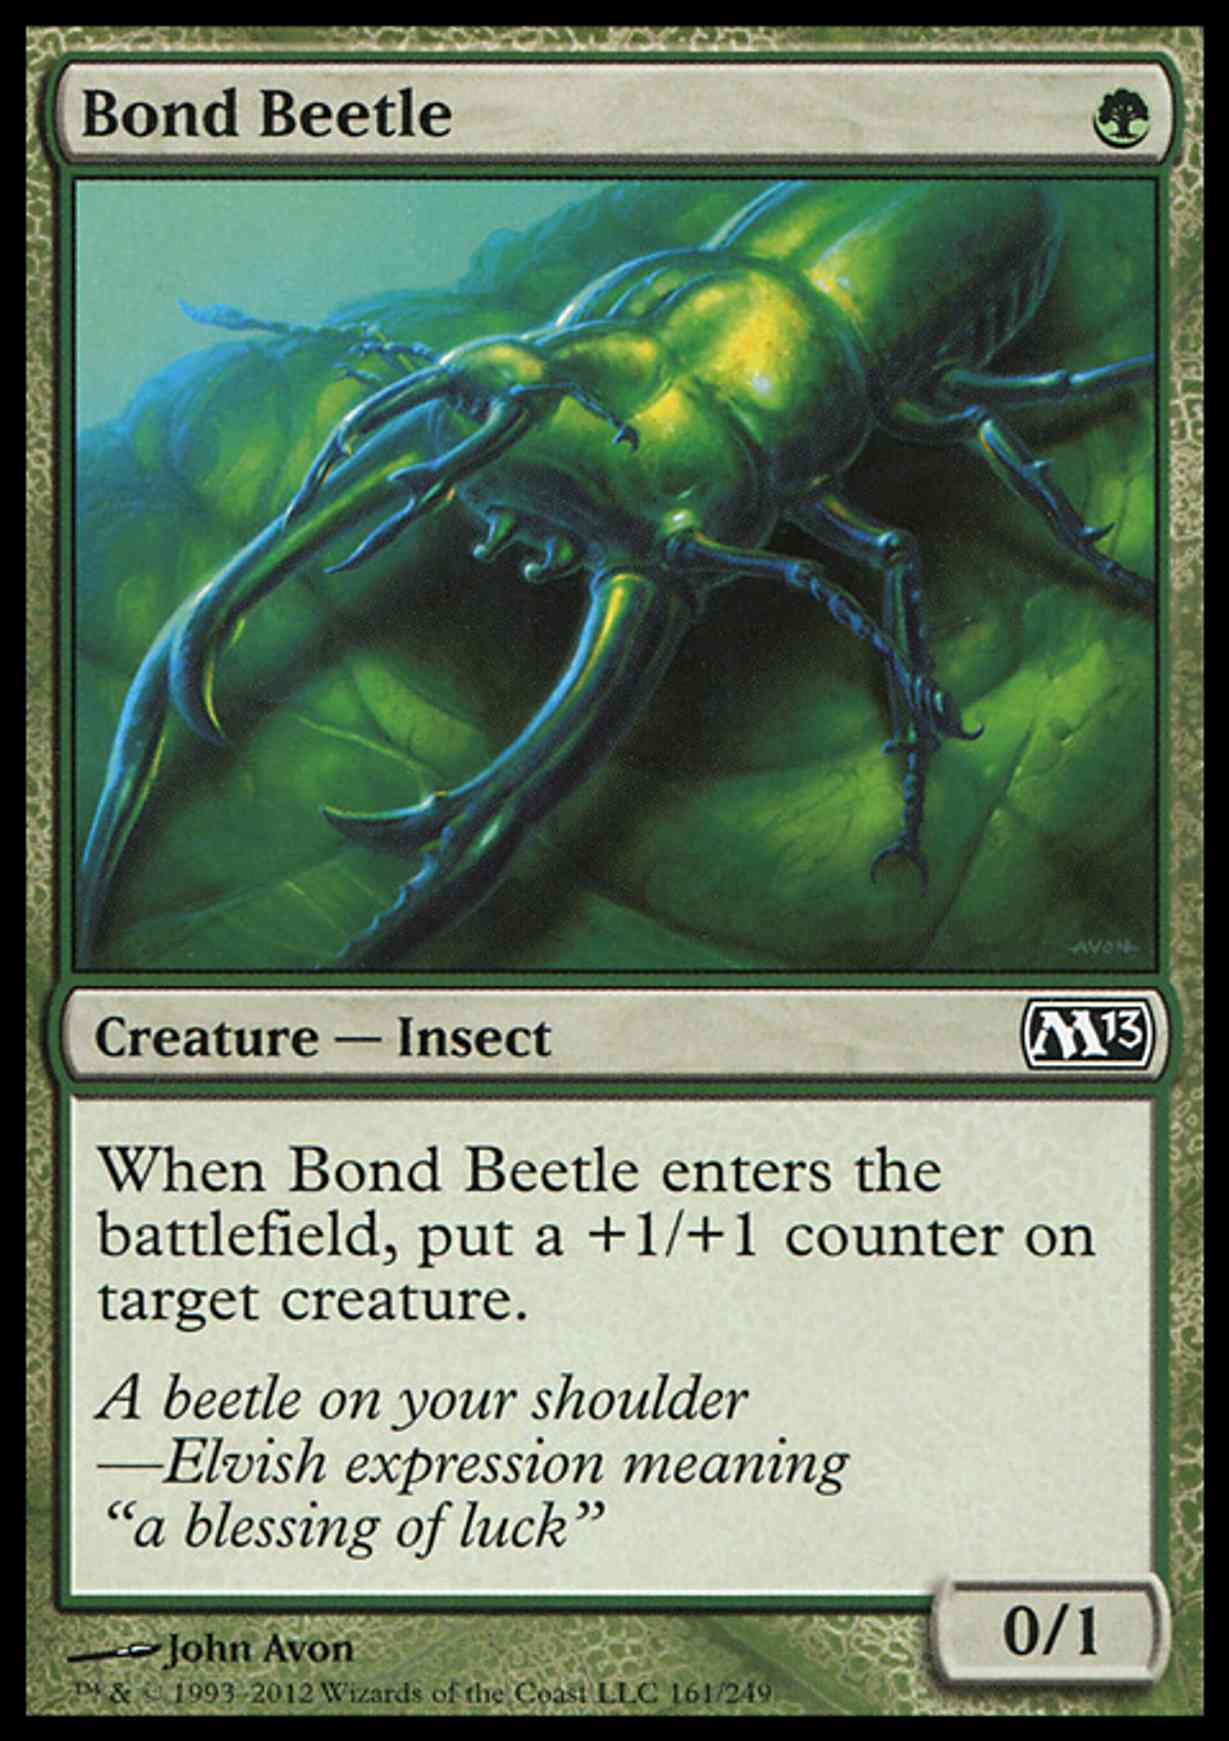 Bond Beetle magic card front